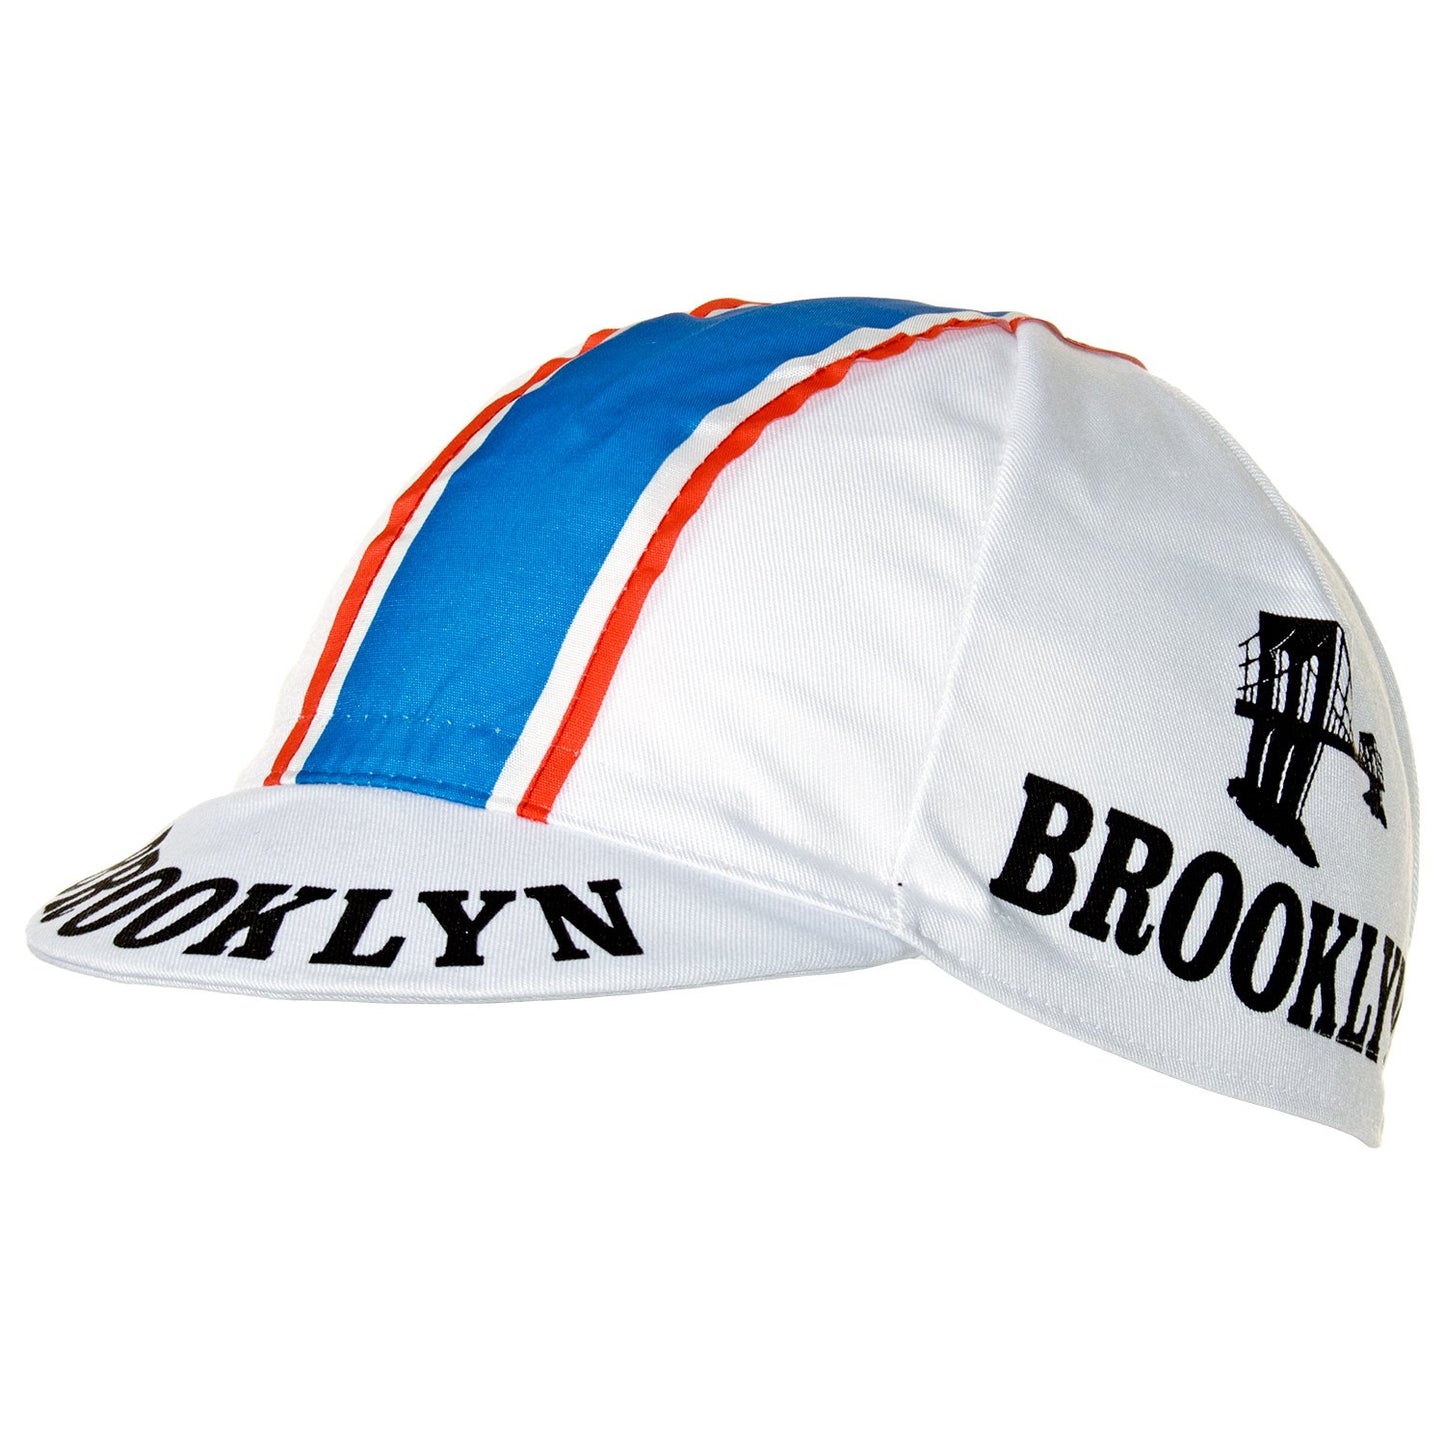 Apis Brooklyn Vintage Cycling Cap - White